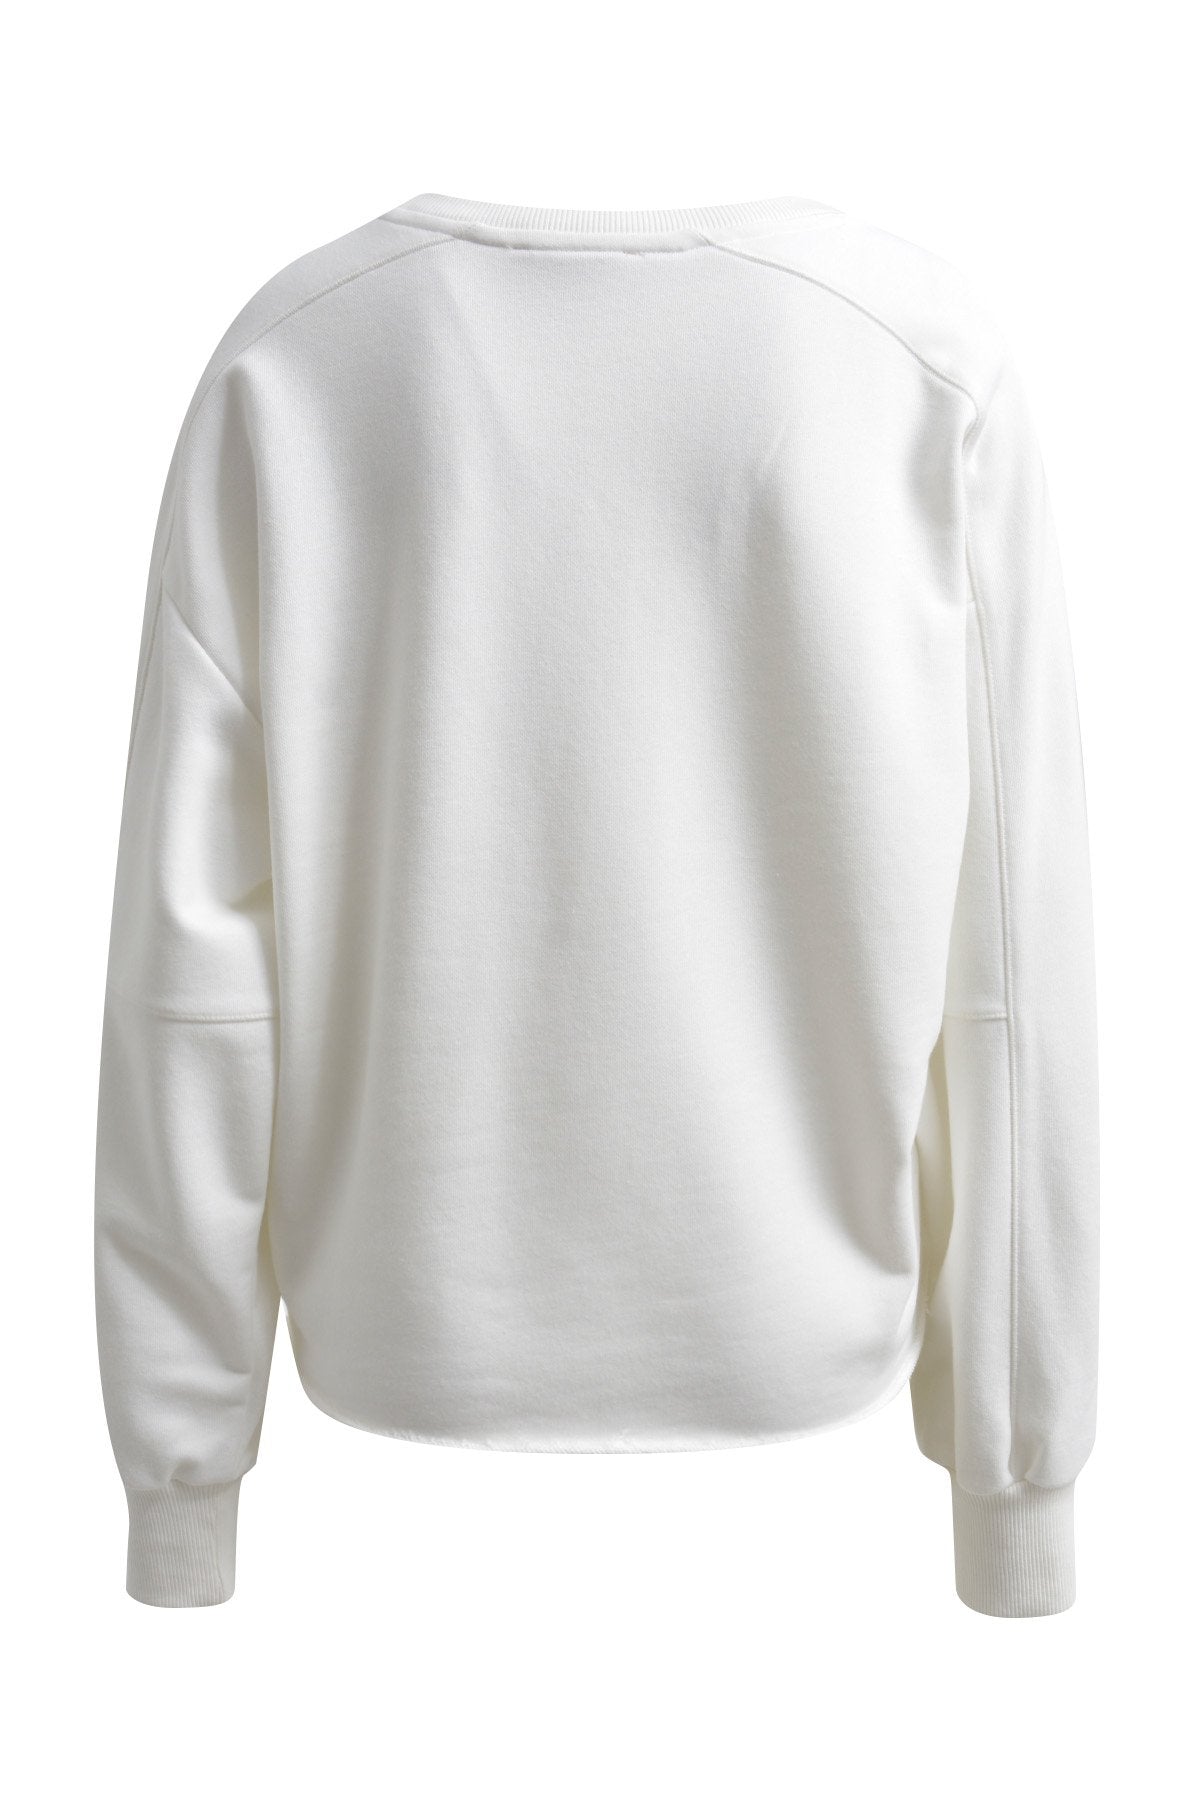 Sweatshirt Embellished (Offwhite)